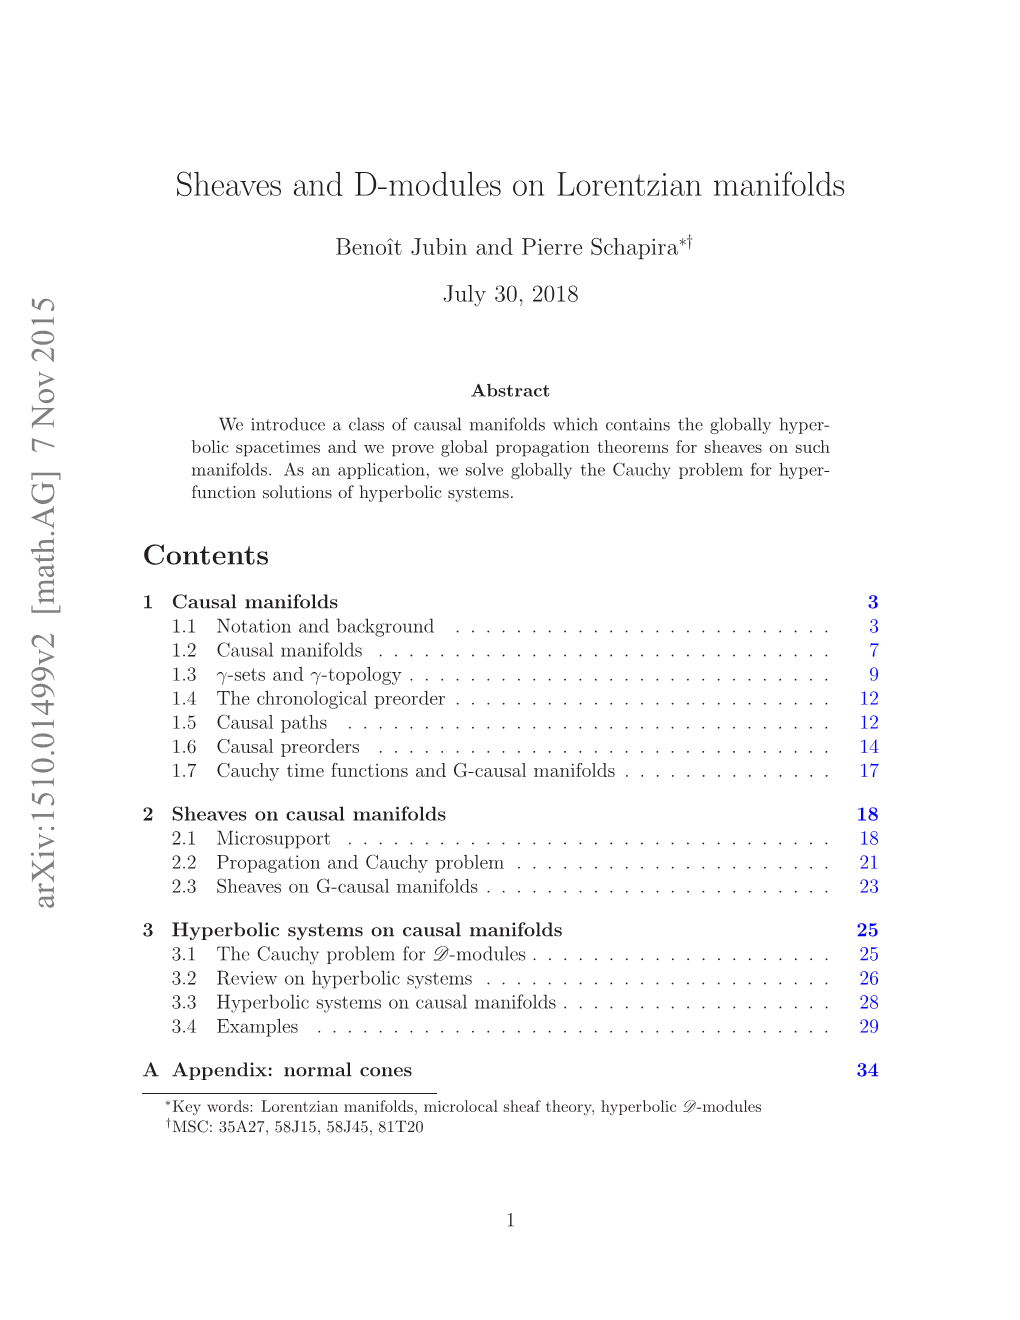 Sheaves and D-Modules on Lorentzian Manifolds